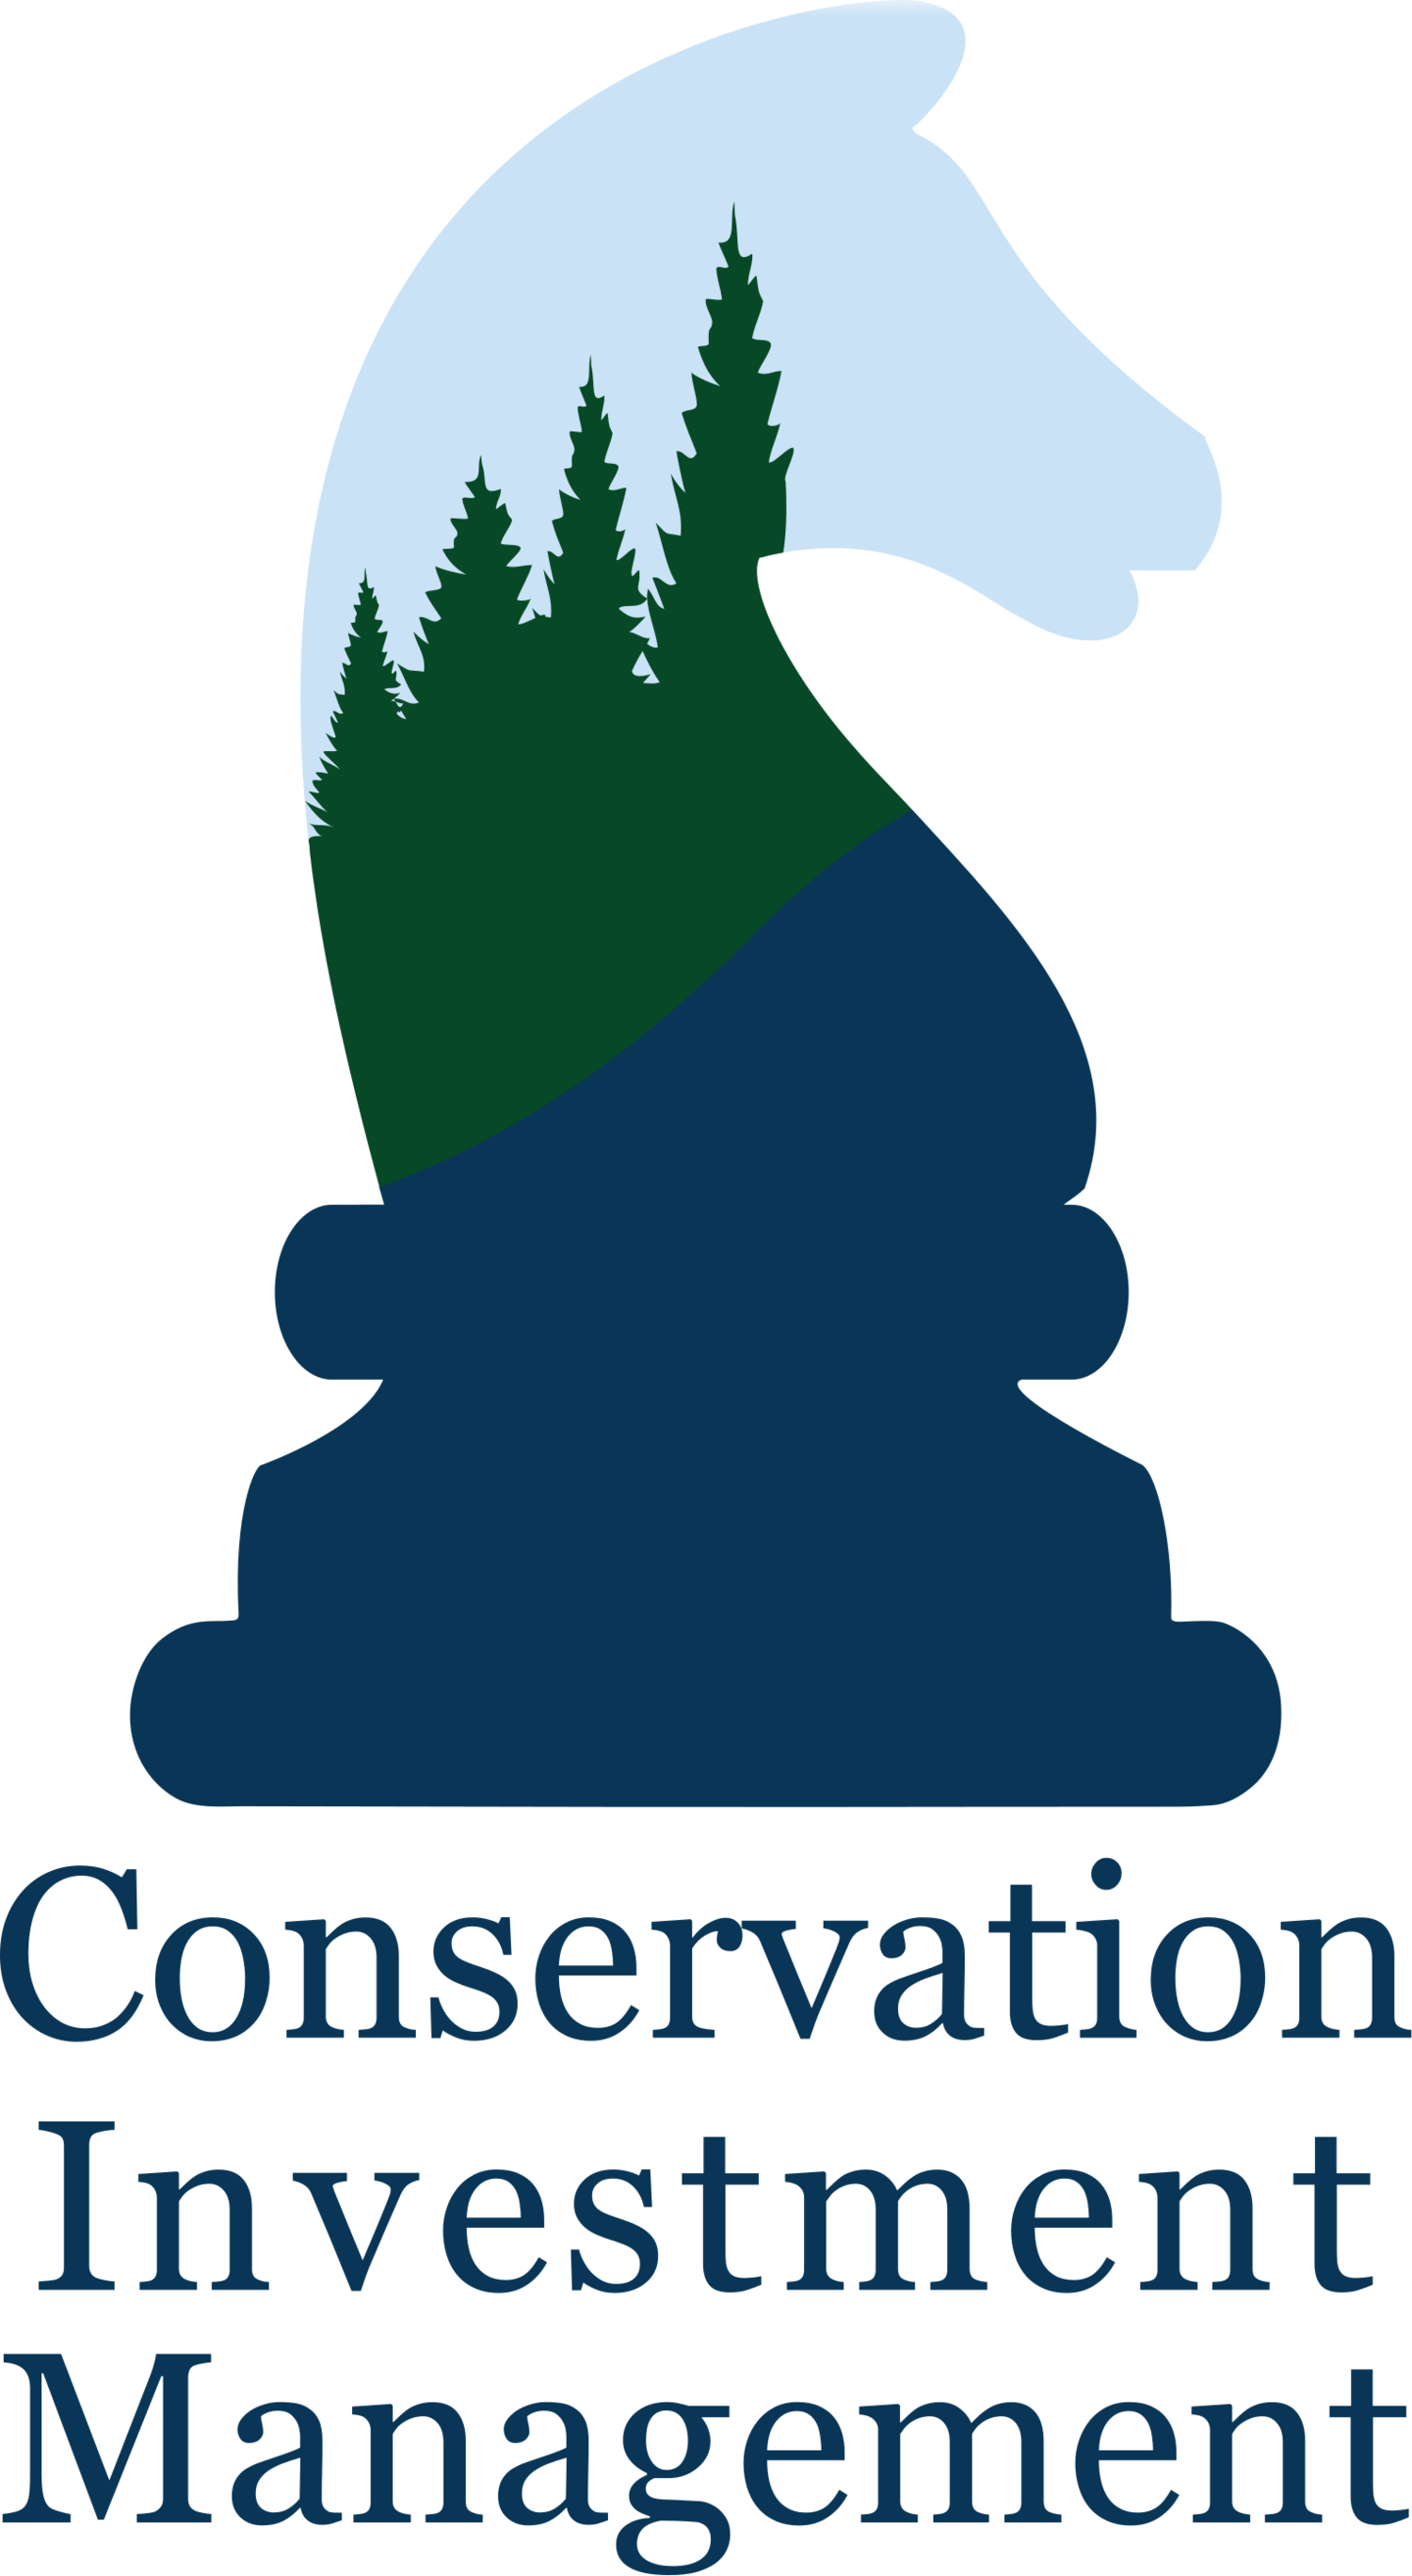 Conservation Investment Management